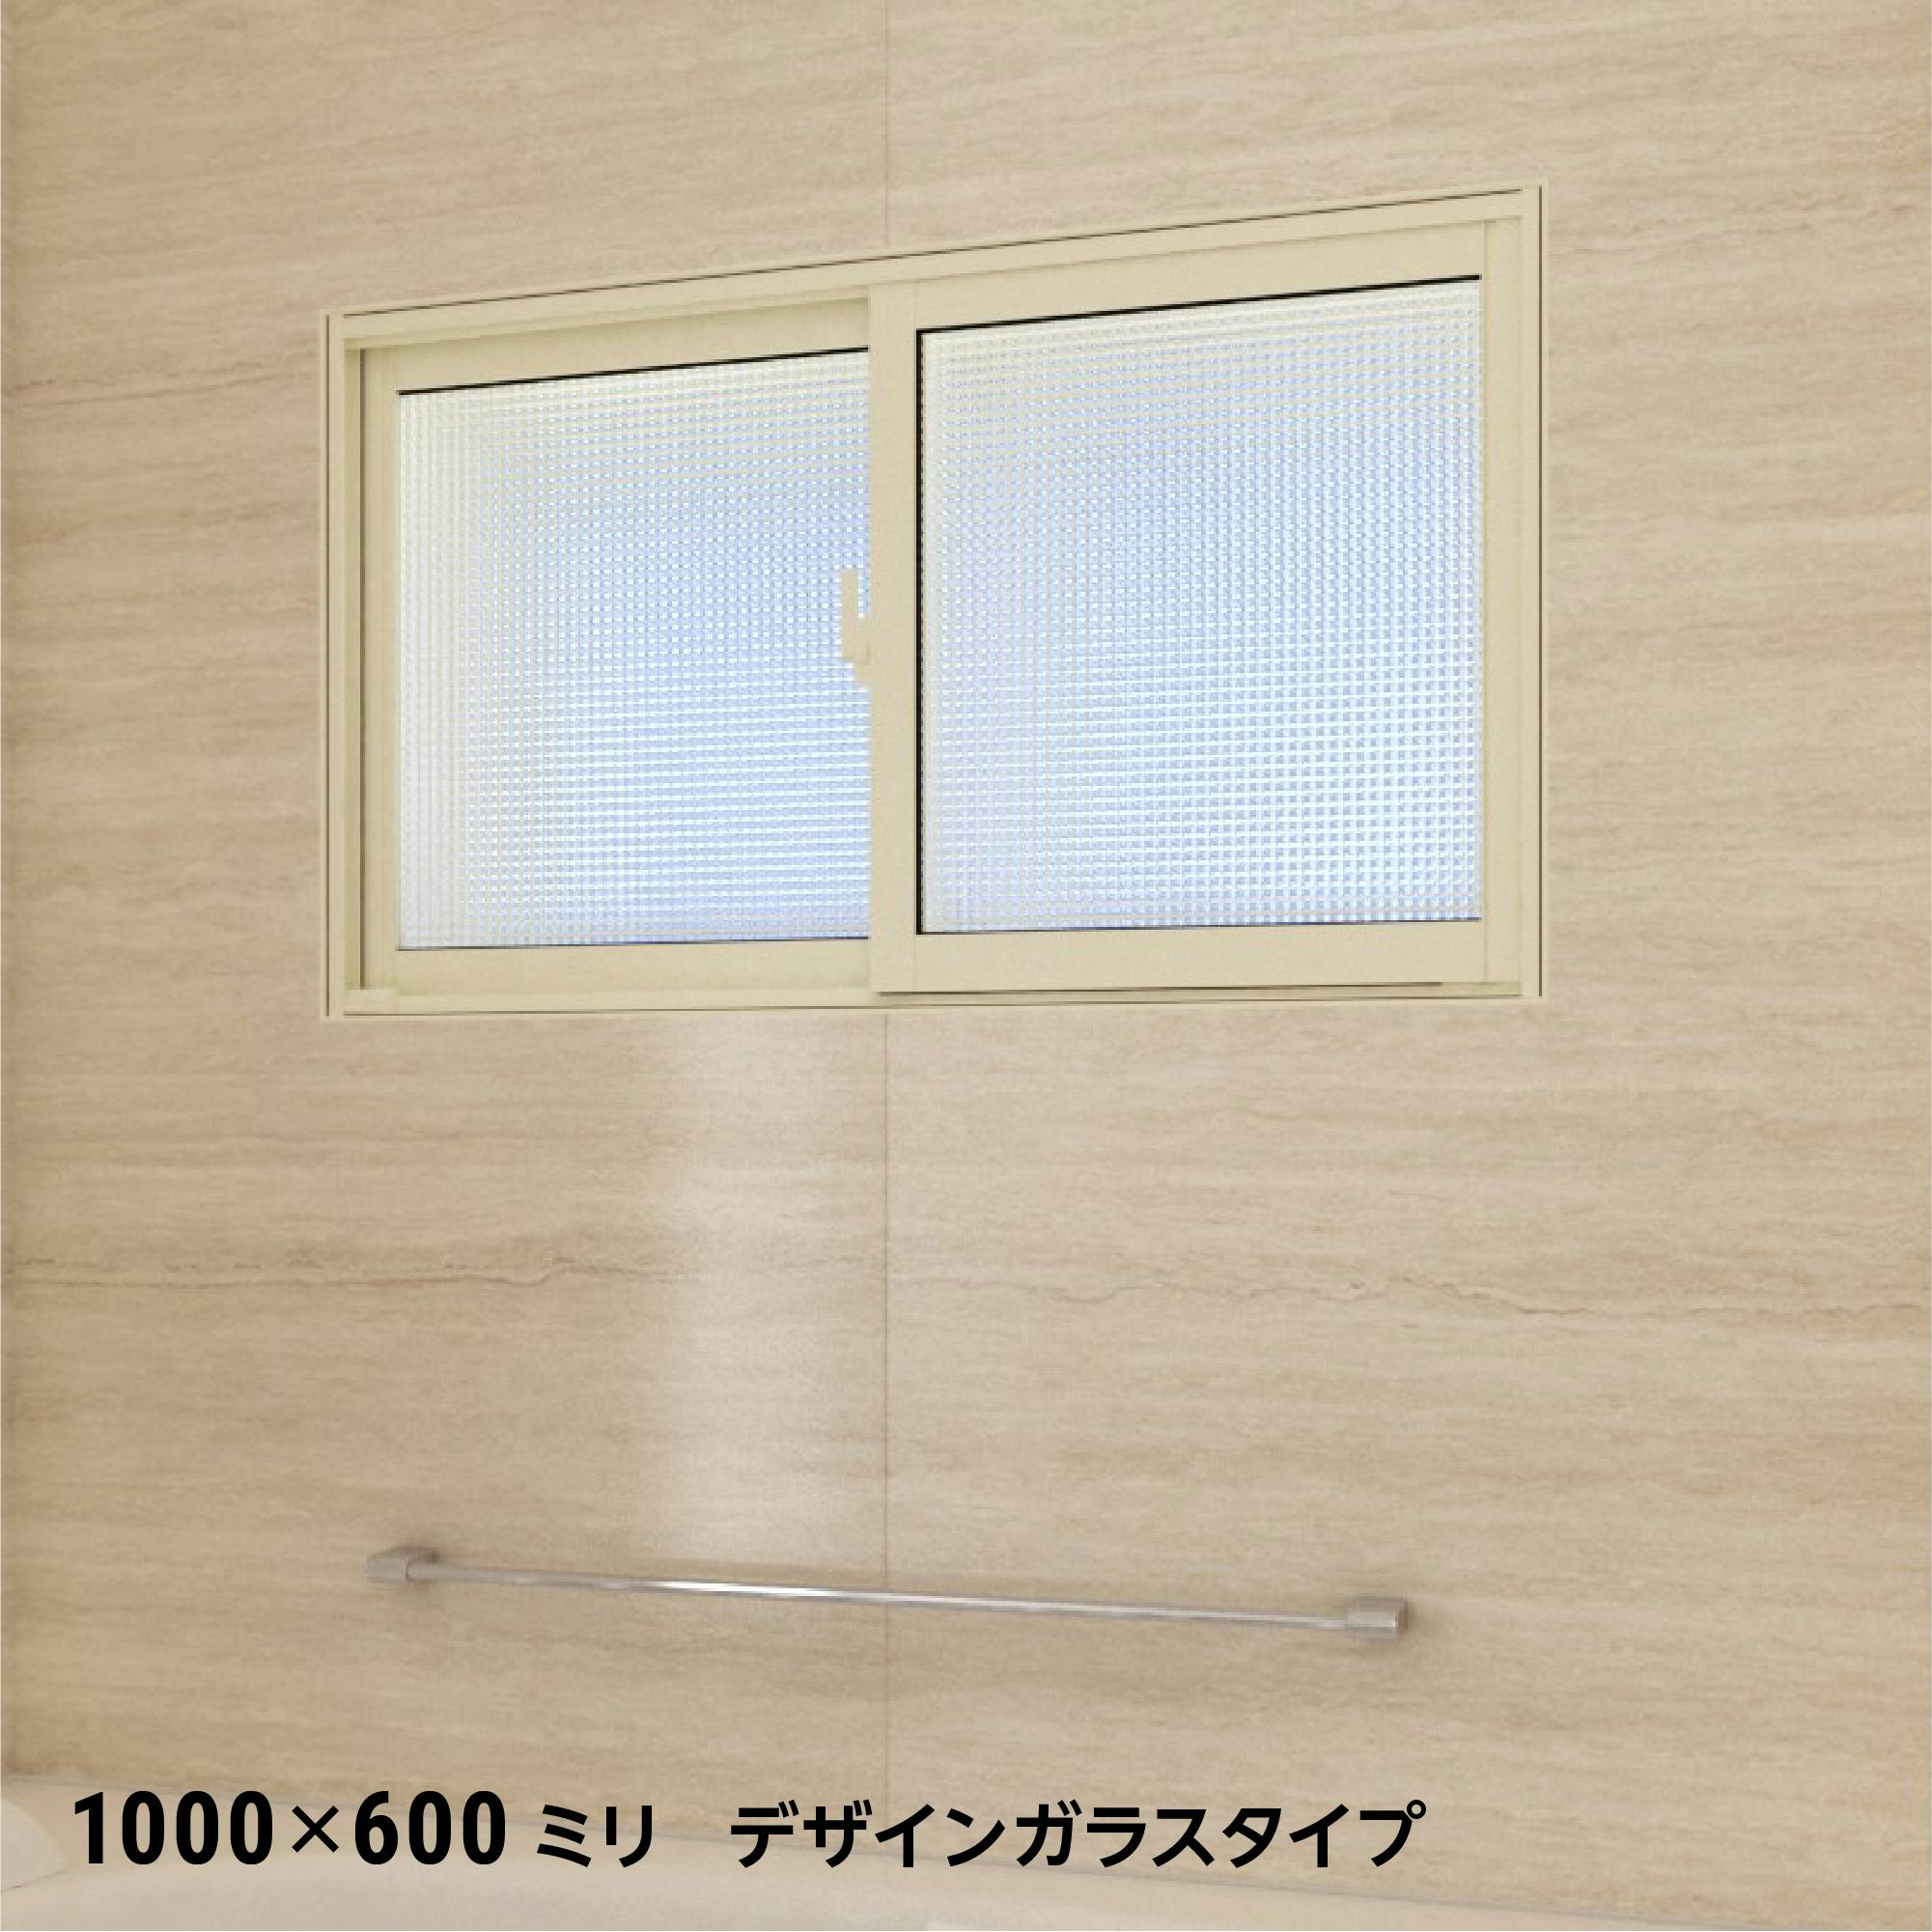 LIXILの内窓「インプラス」浴室仕様 (ユニットバス納まり) 引違い窓 - 浴室の窓に使用した事例